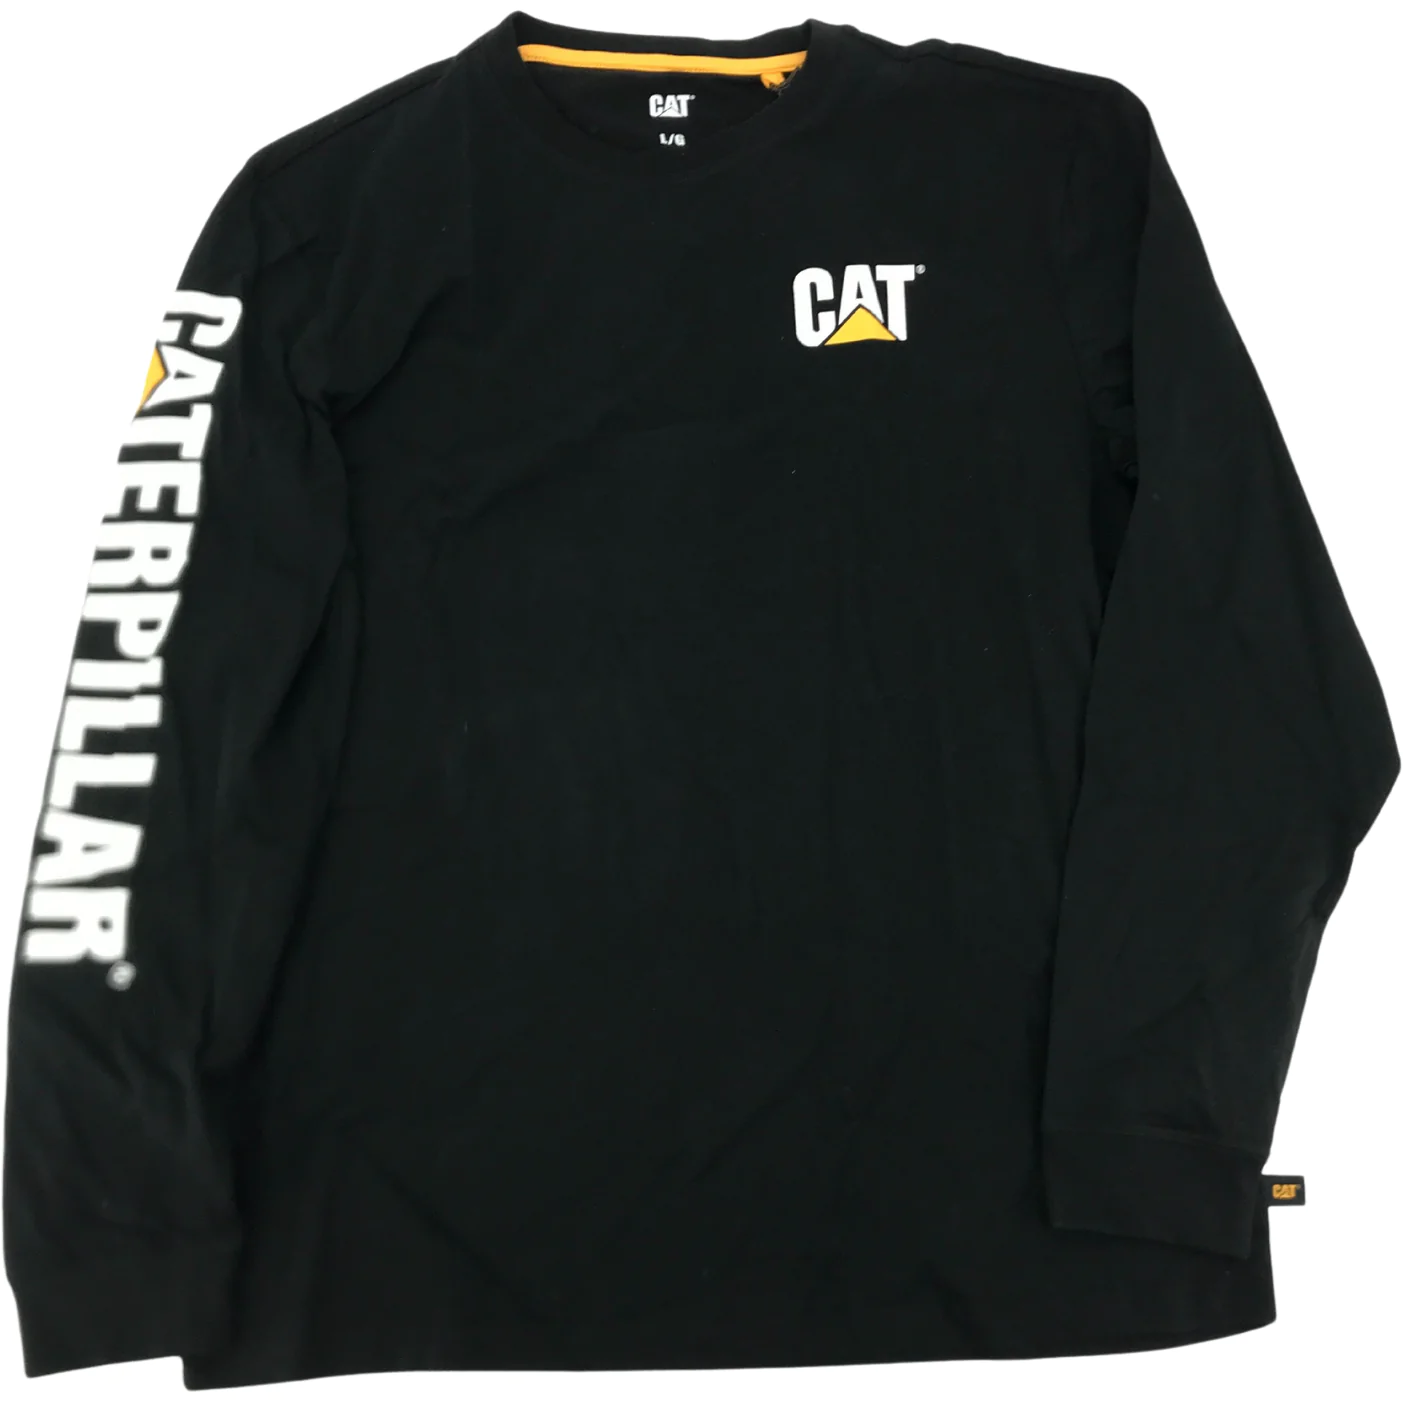 CAT Men's Long Sleeve Shirt: Black / Caterpillar / Large